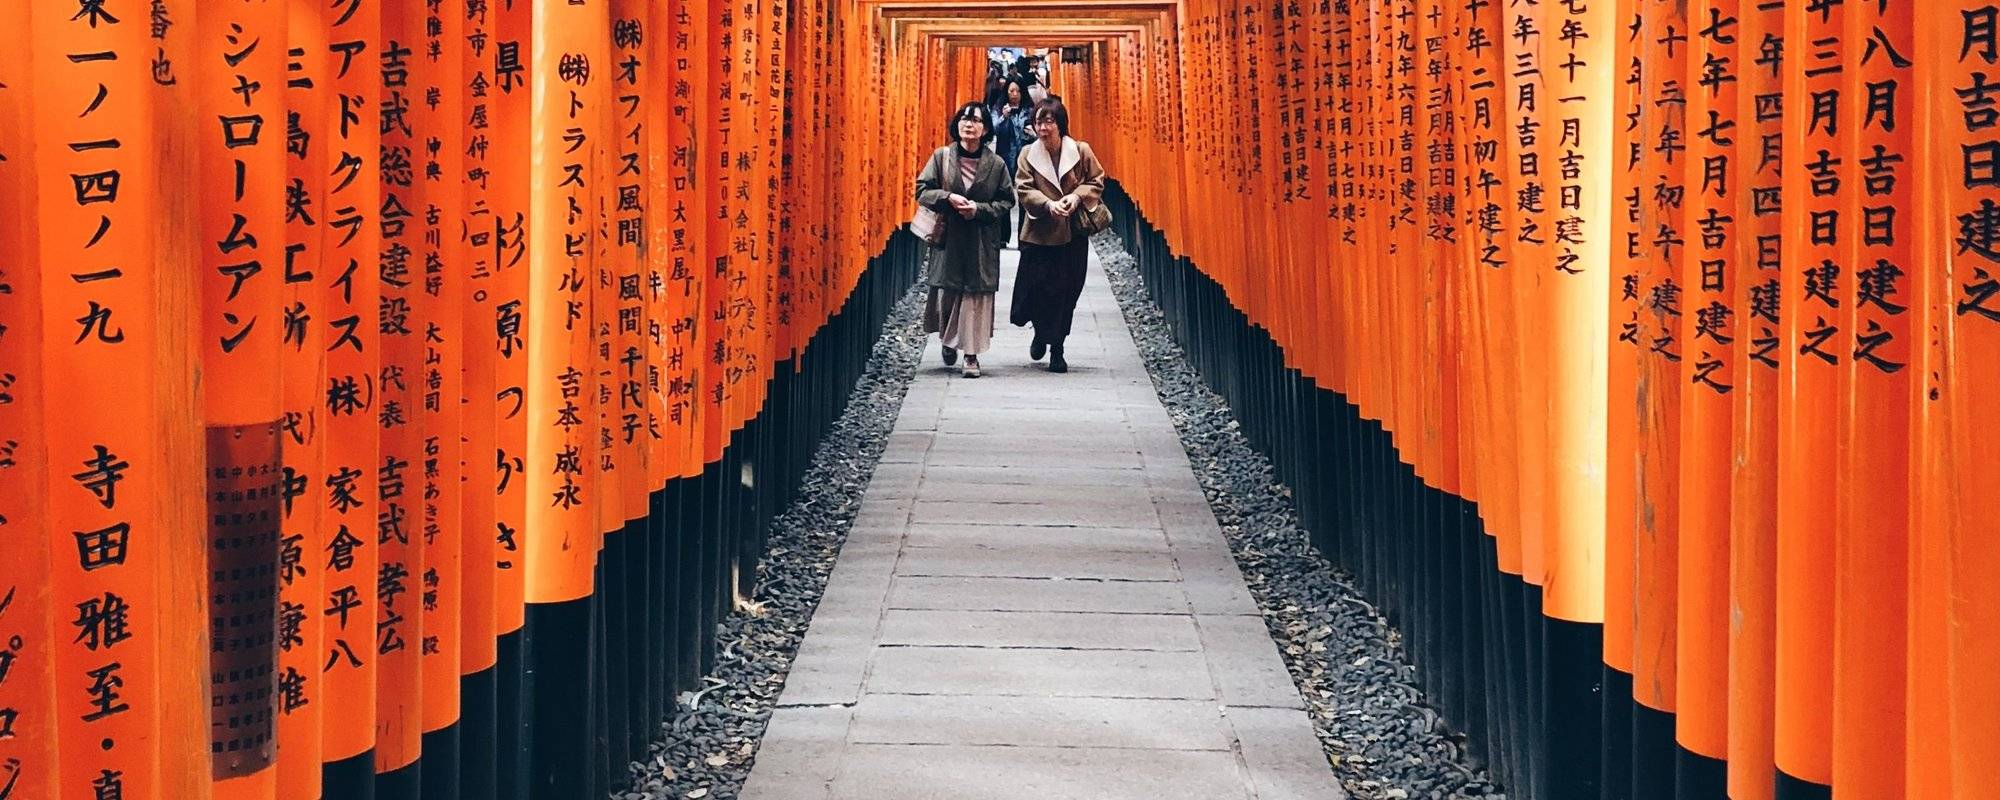 10000 Torii gatest - The best walk in Kyoto - Fushimi Inari Shrine